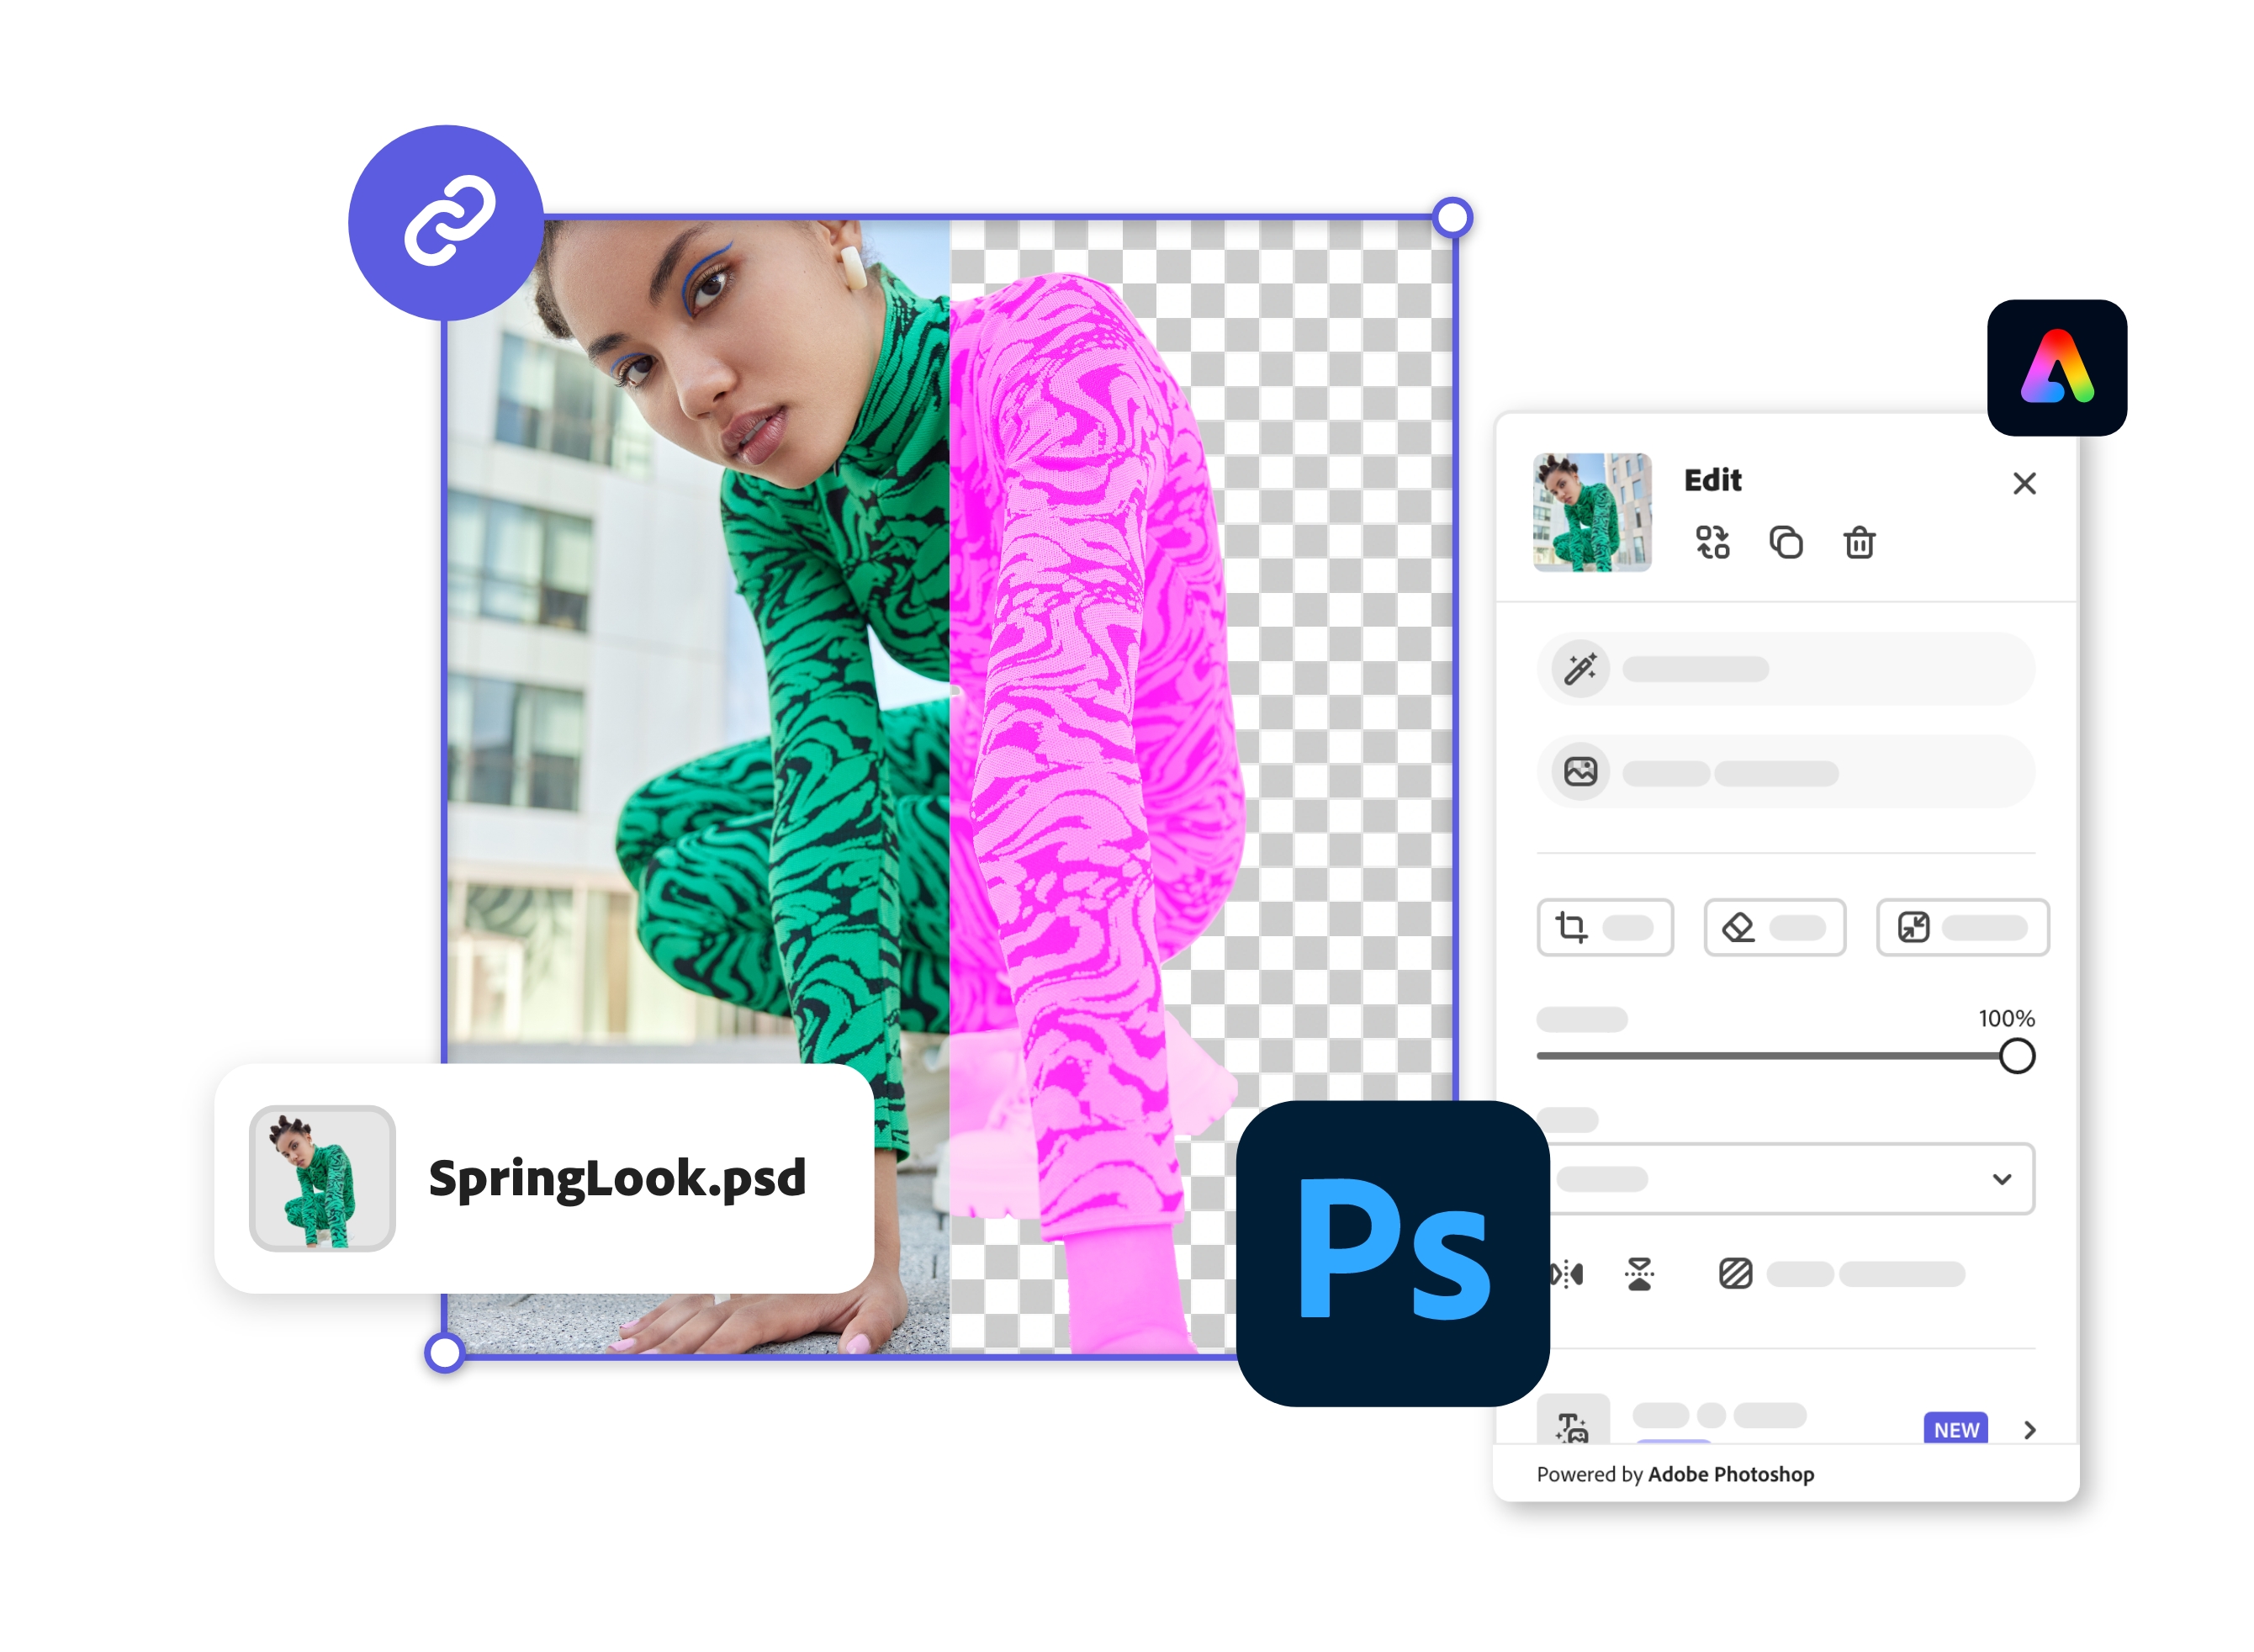 Adobe Express editor Photoshop AI workflow